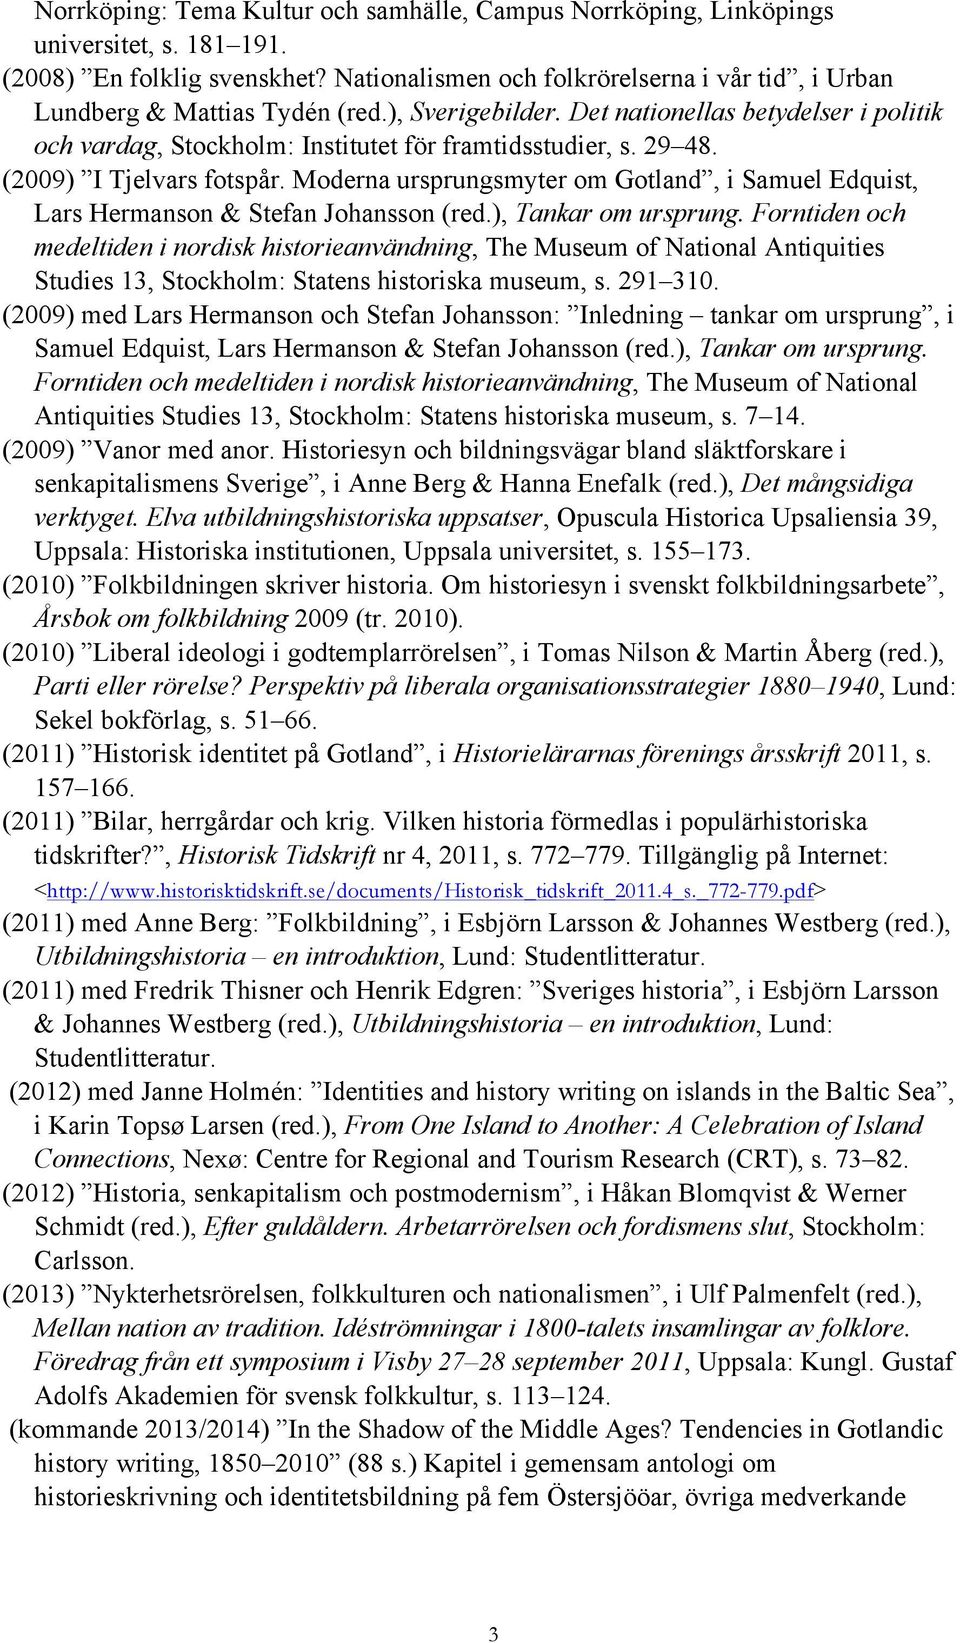 29 48. (2009) I Tjelvars fotspår. Moderna ursprungsmyter om Gotland, i Samuel Edquist, Lars Hermanson & Stefan Johansson (red.), Tankar om ursprung.